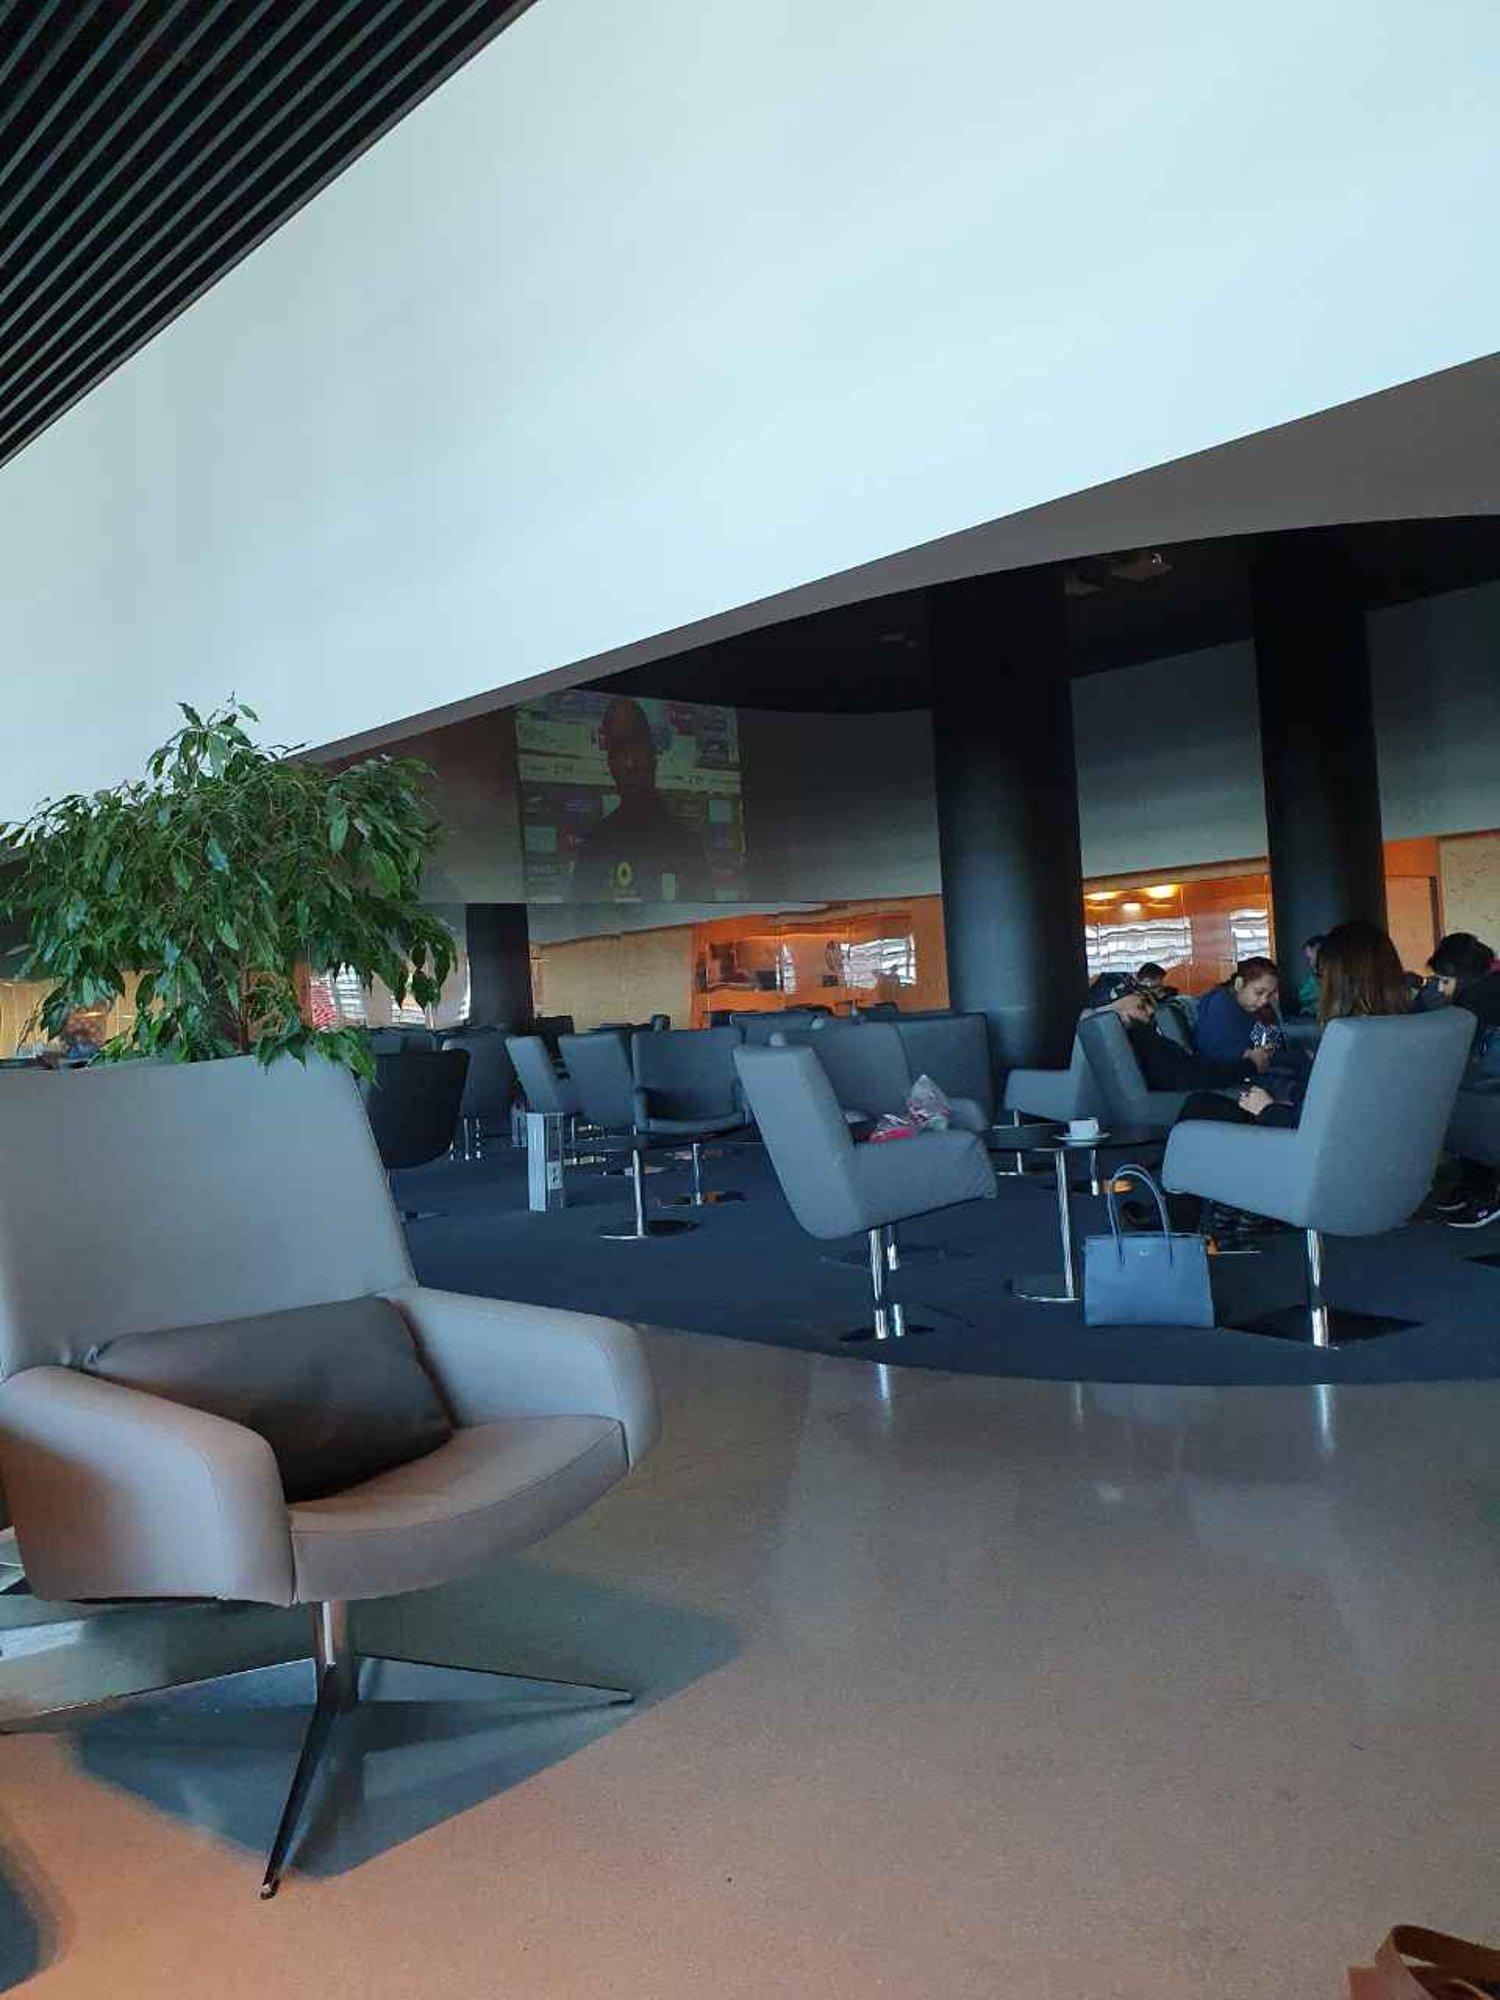 ANA Airport Lounge image 27 of 49